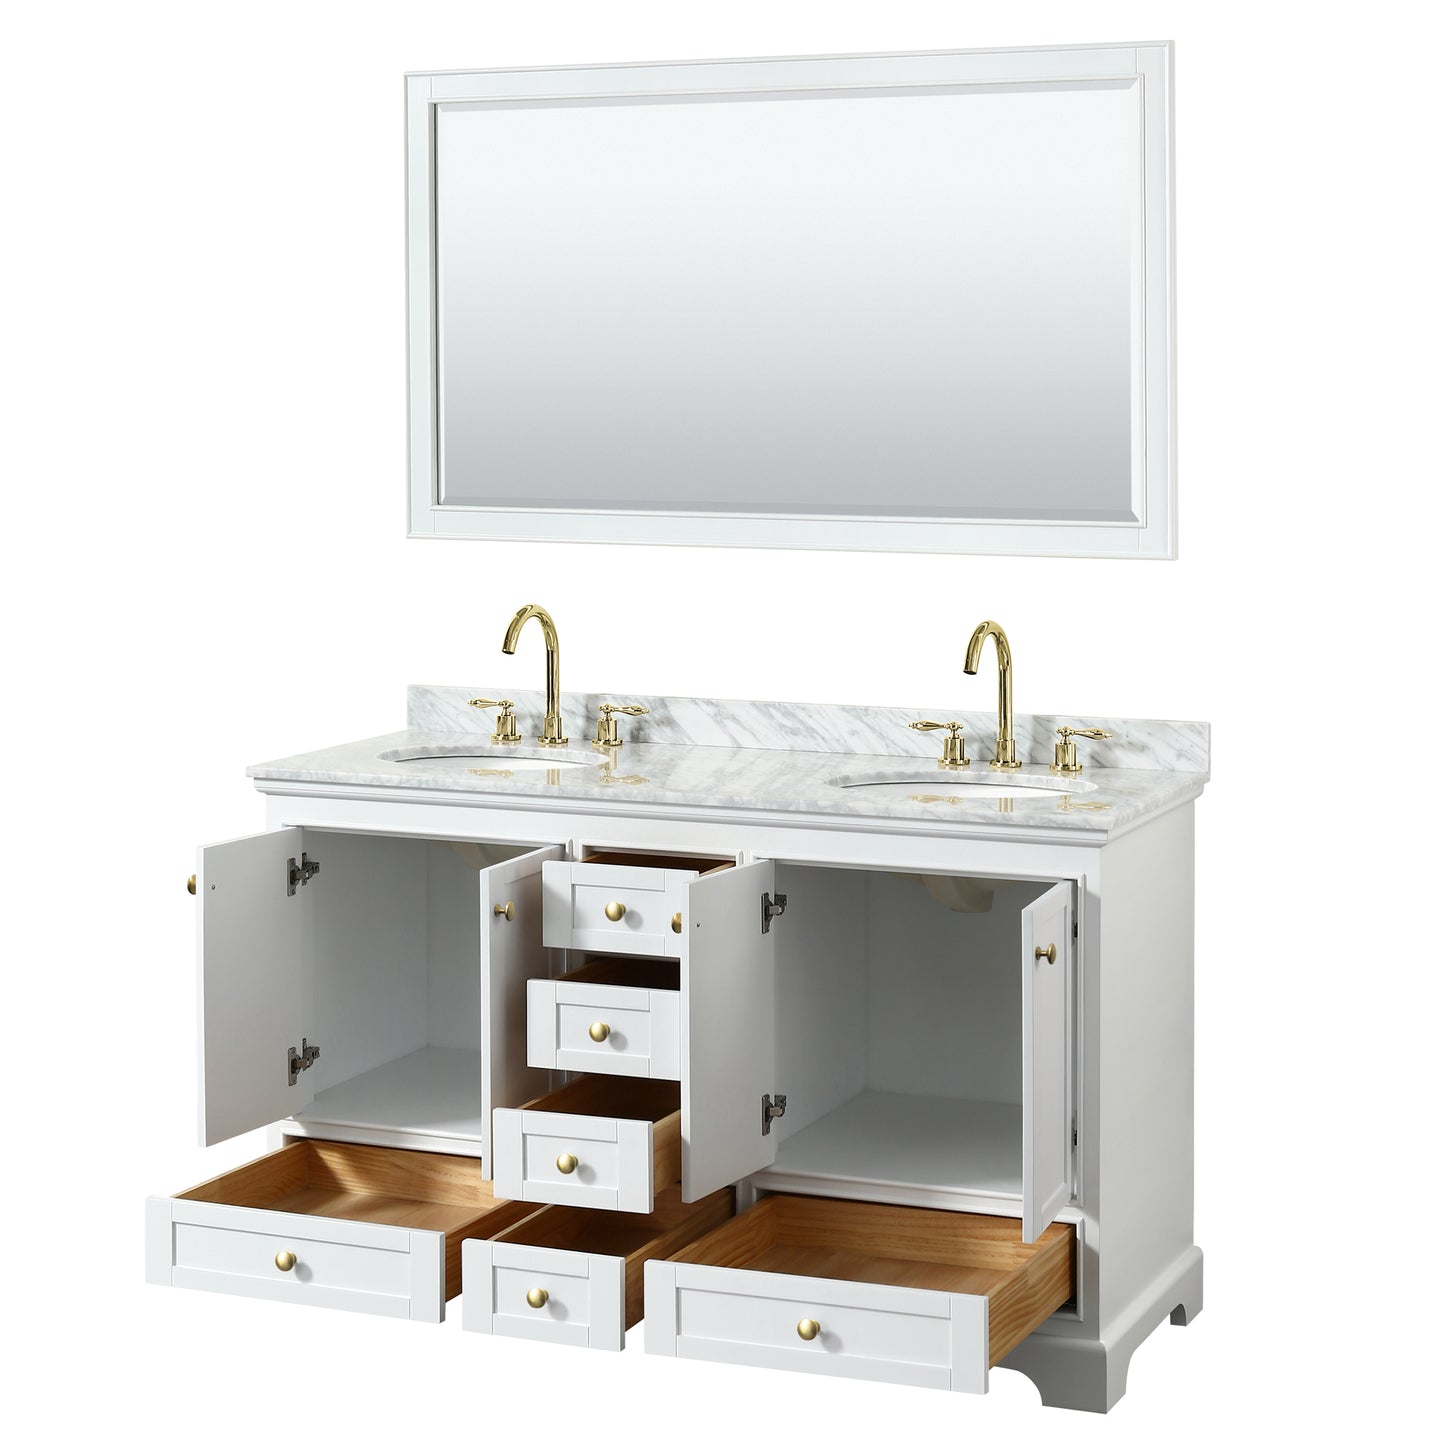 Wyndham Collection Deborah 60 Inch Double Bathroom Vanity in White, White Carrara Marble Countertop, Undermount Oval Sinks, Brushed Gold Trim - Luxe Bathroom Vanities